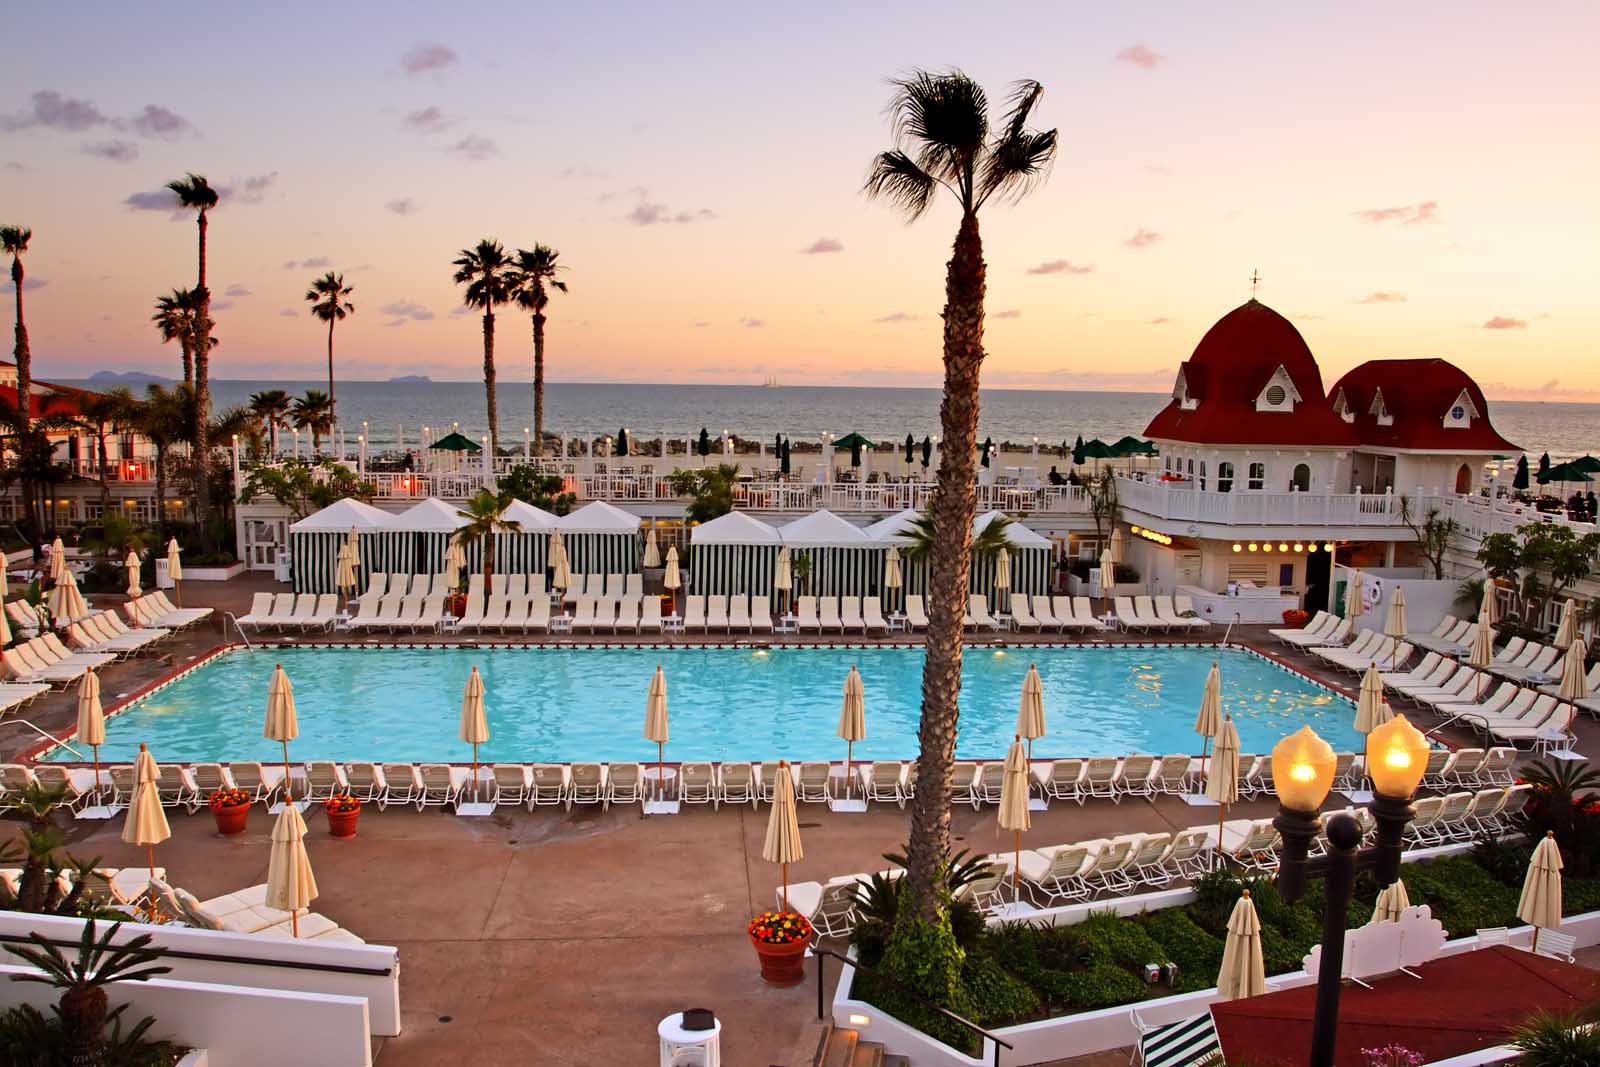 Where to stay in Coronado San Diego